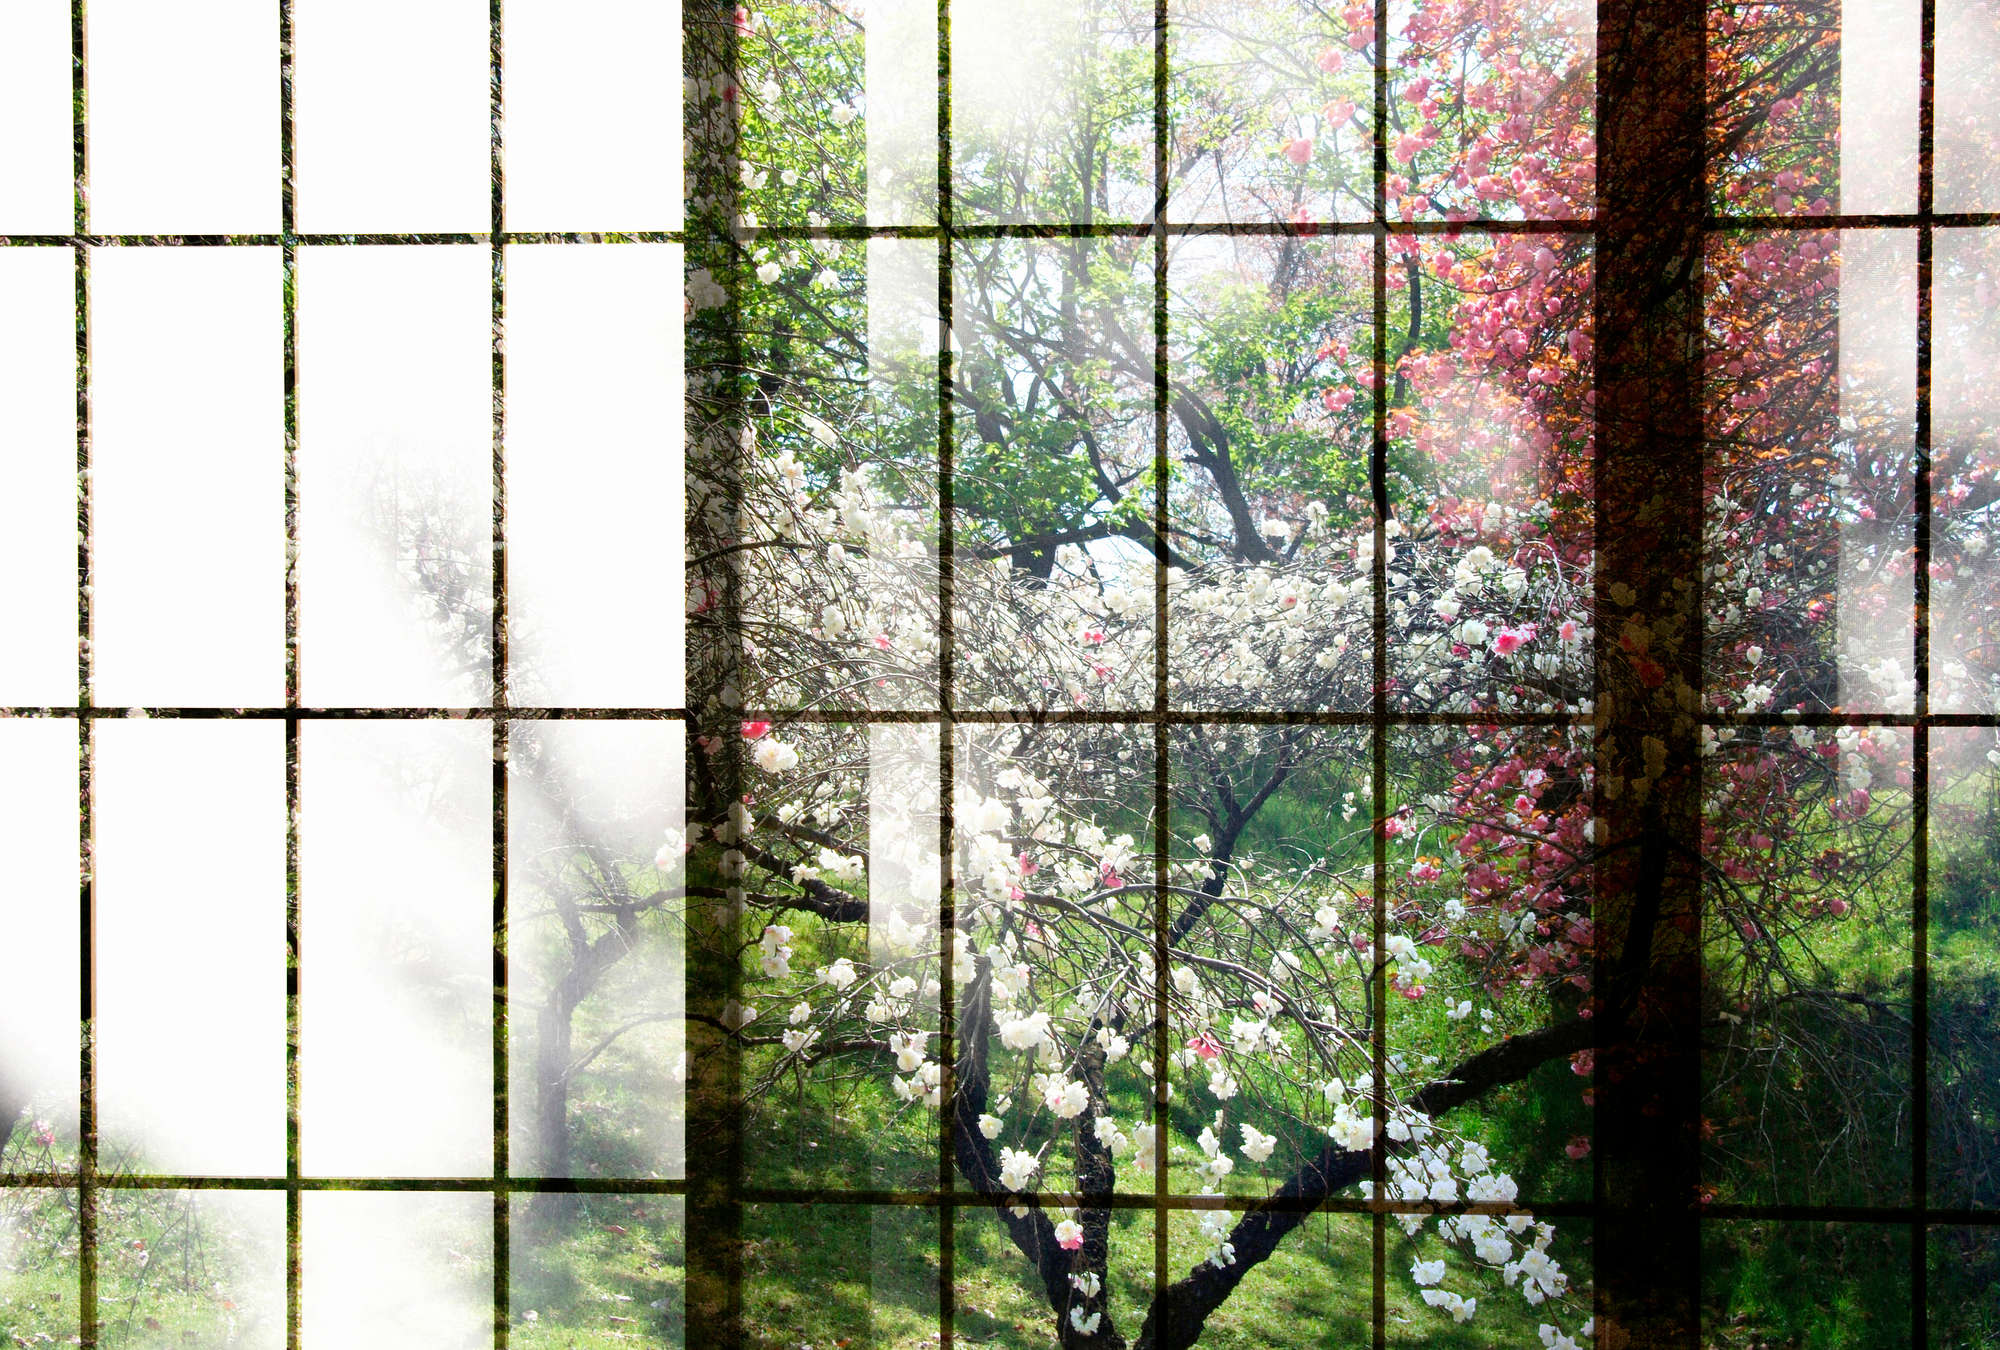             Orchard 2 - Photo wallpaper, Window with garden view - Green, Pink | Premium smooth fleece
        